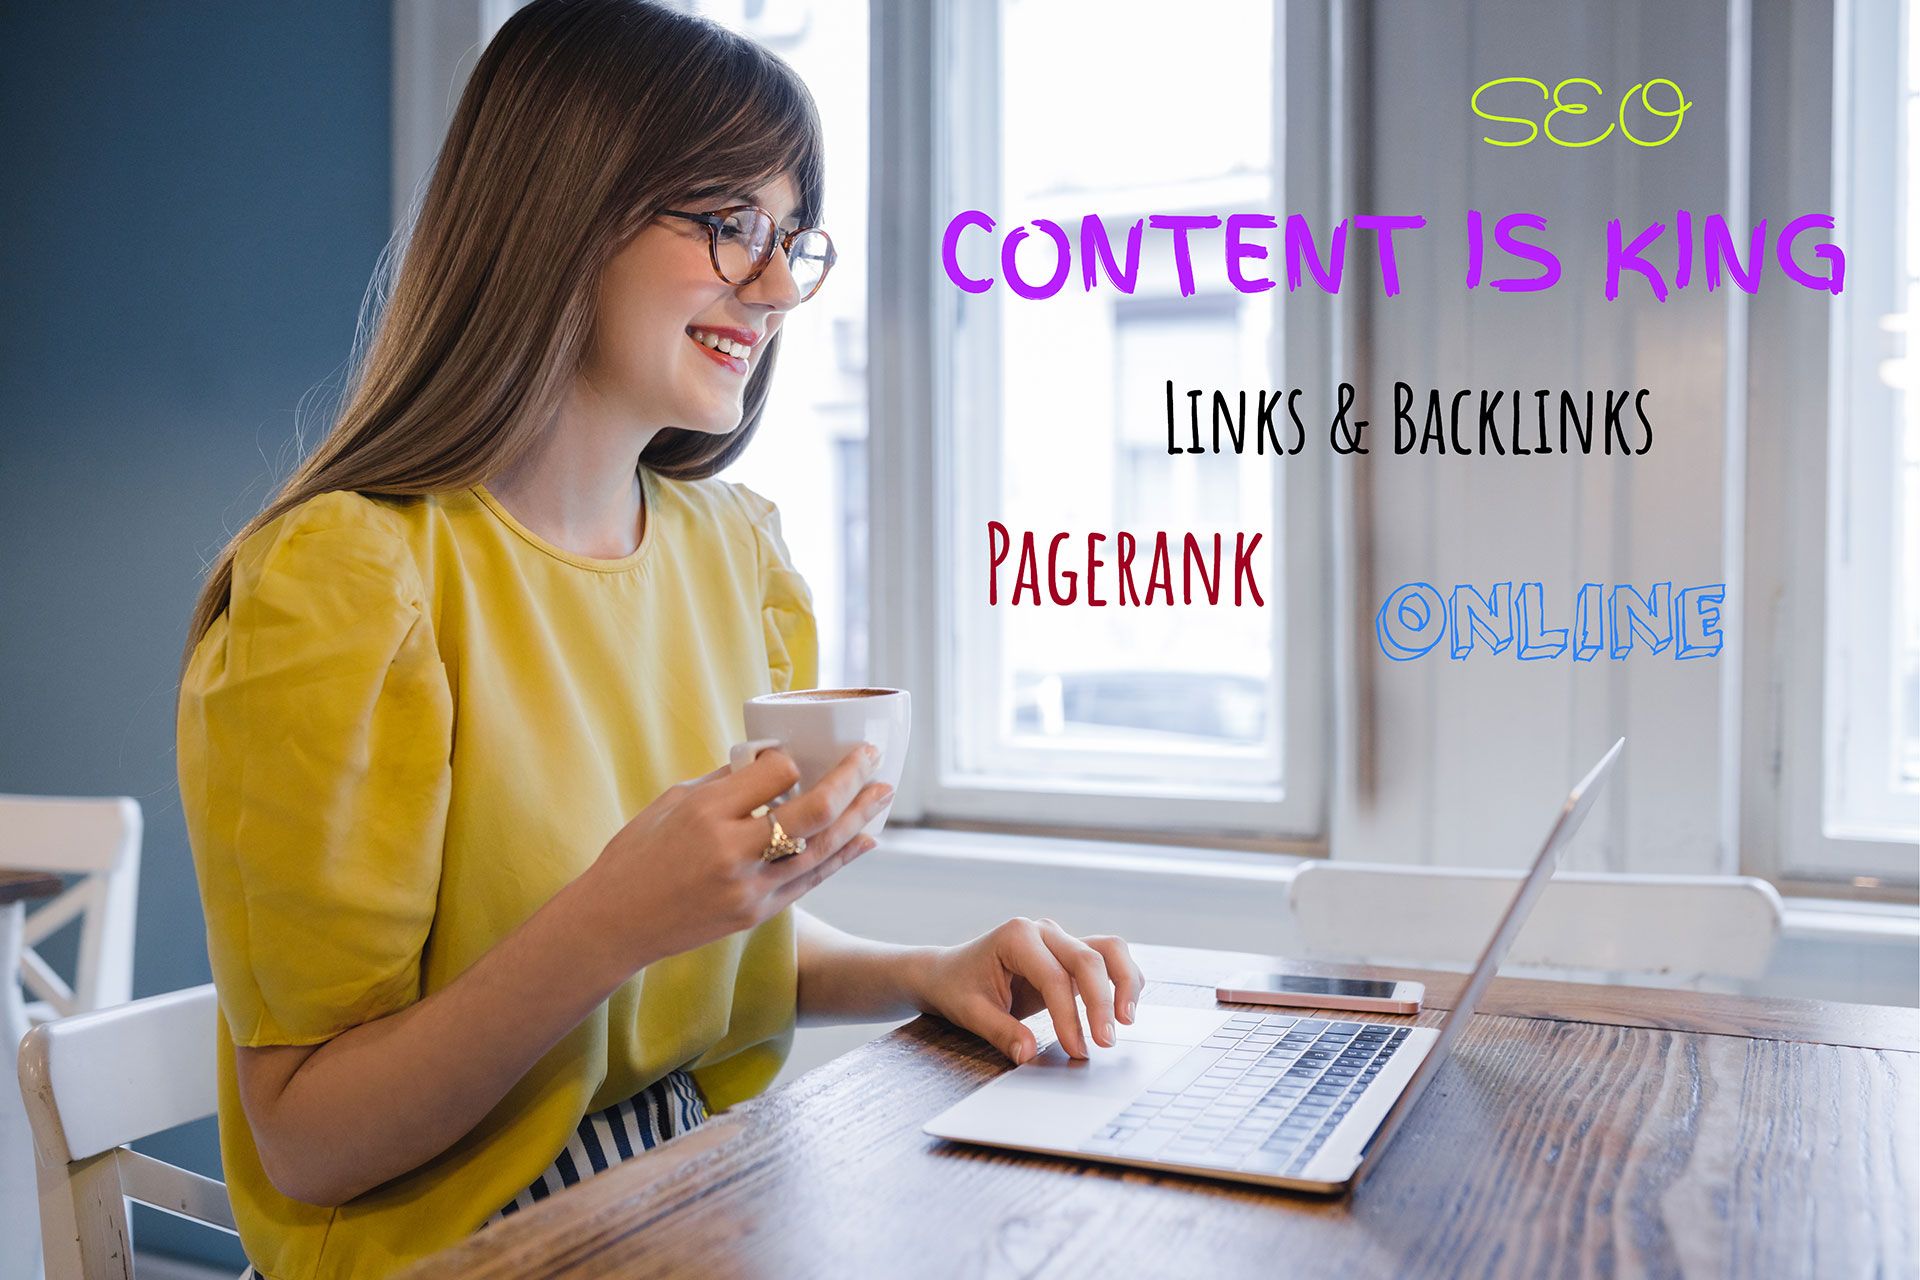 Content is King: Kann SEO Content ruinieren? Teil 2: Links & Backlinks